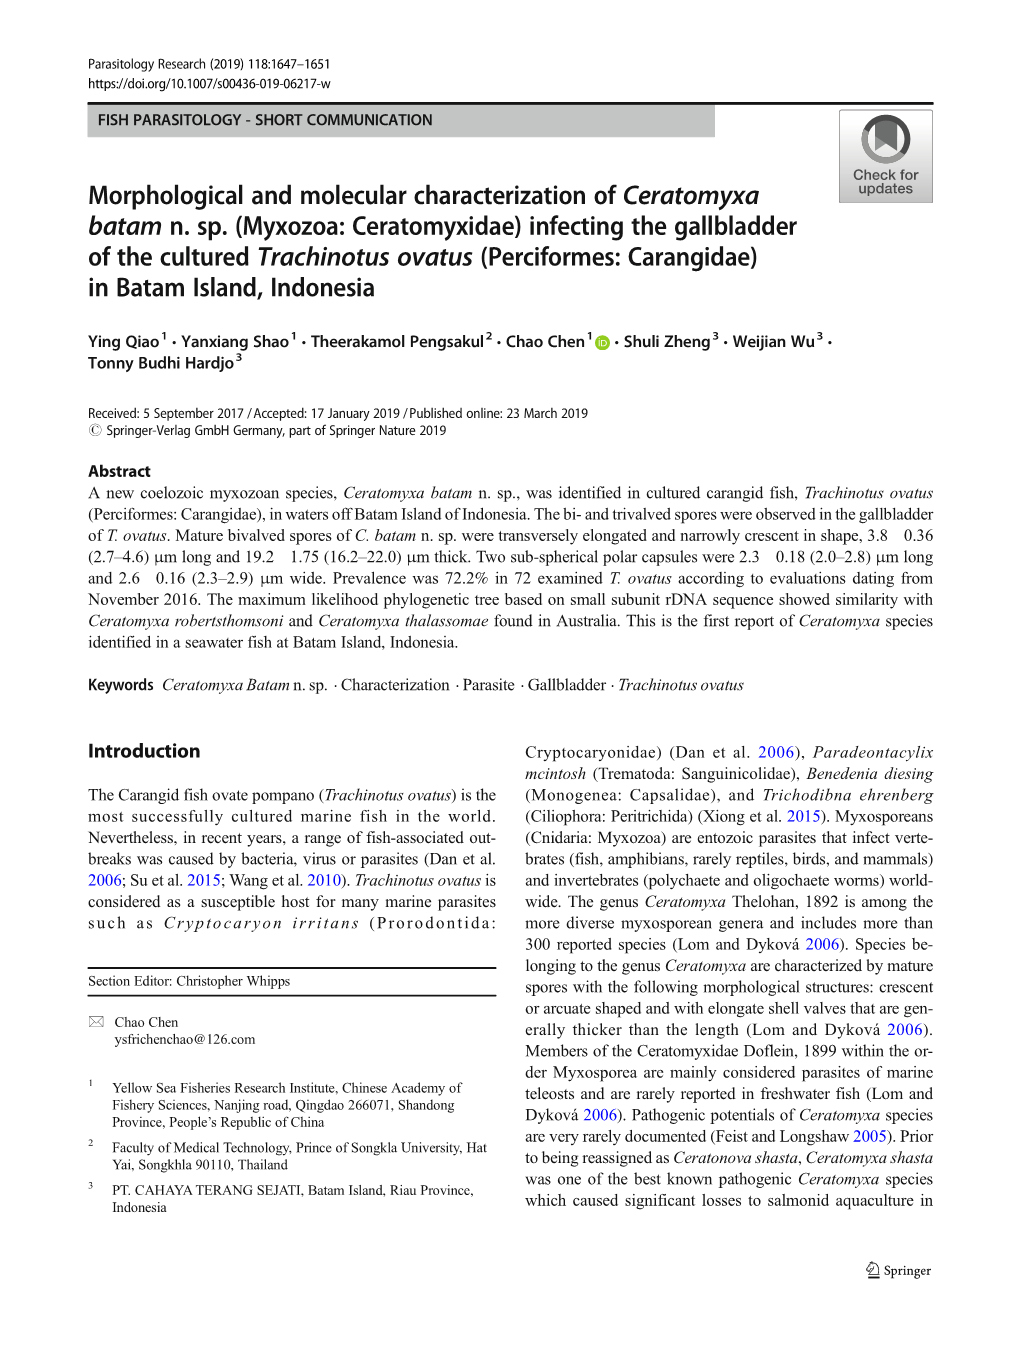 Morphological and Molecular Characterization of Ceratomyxa Batam N. Sp. (Myxozoa: Ceratomyxidae) Infecting the Gallbladder of Th